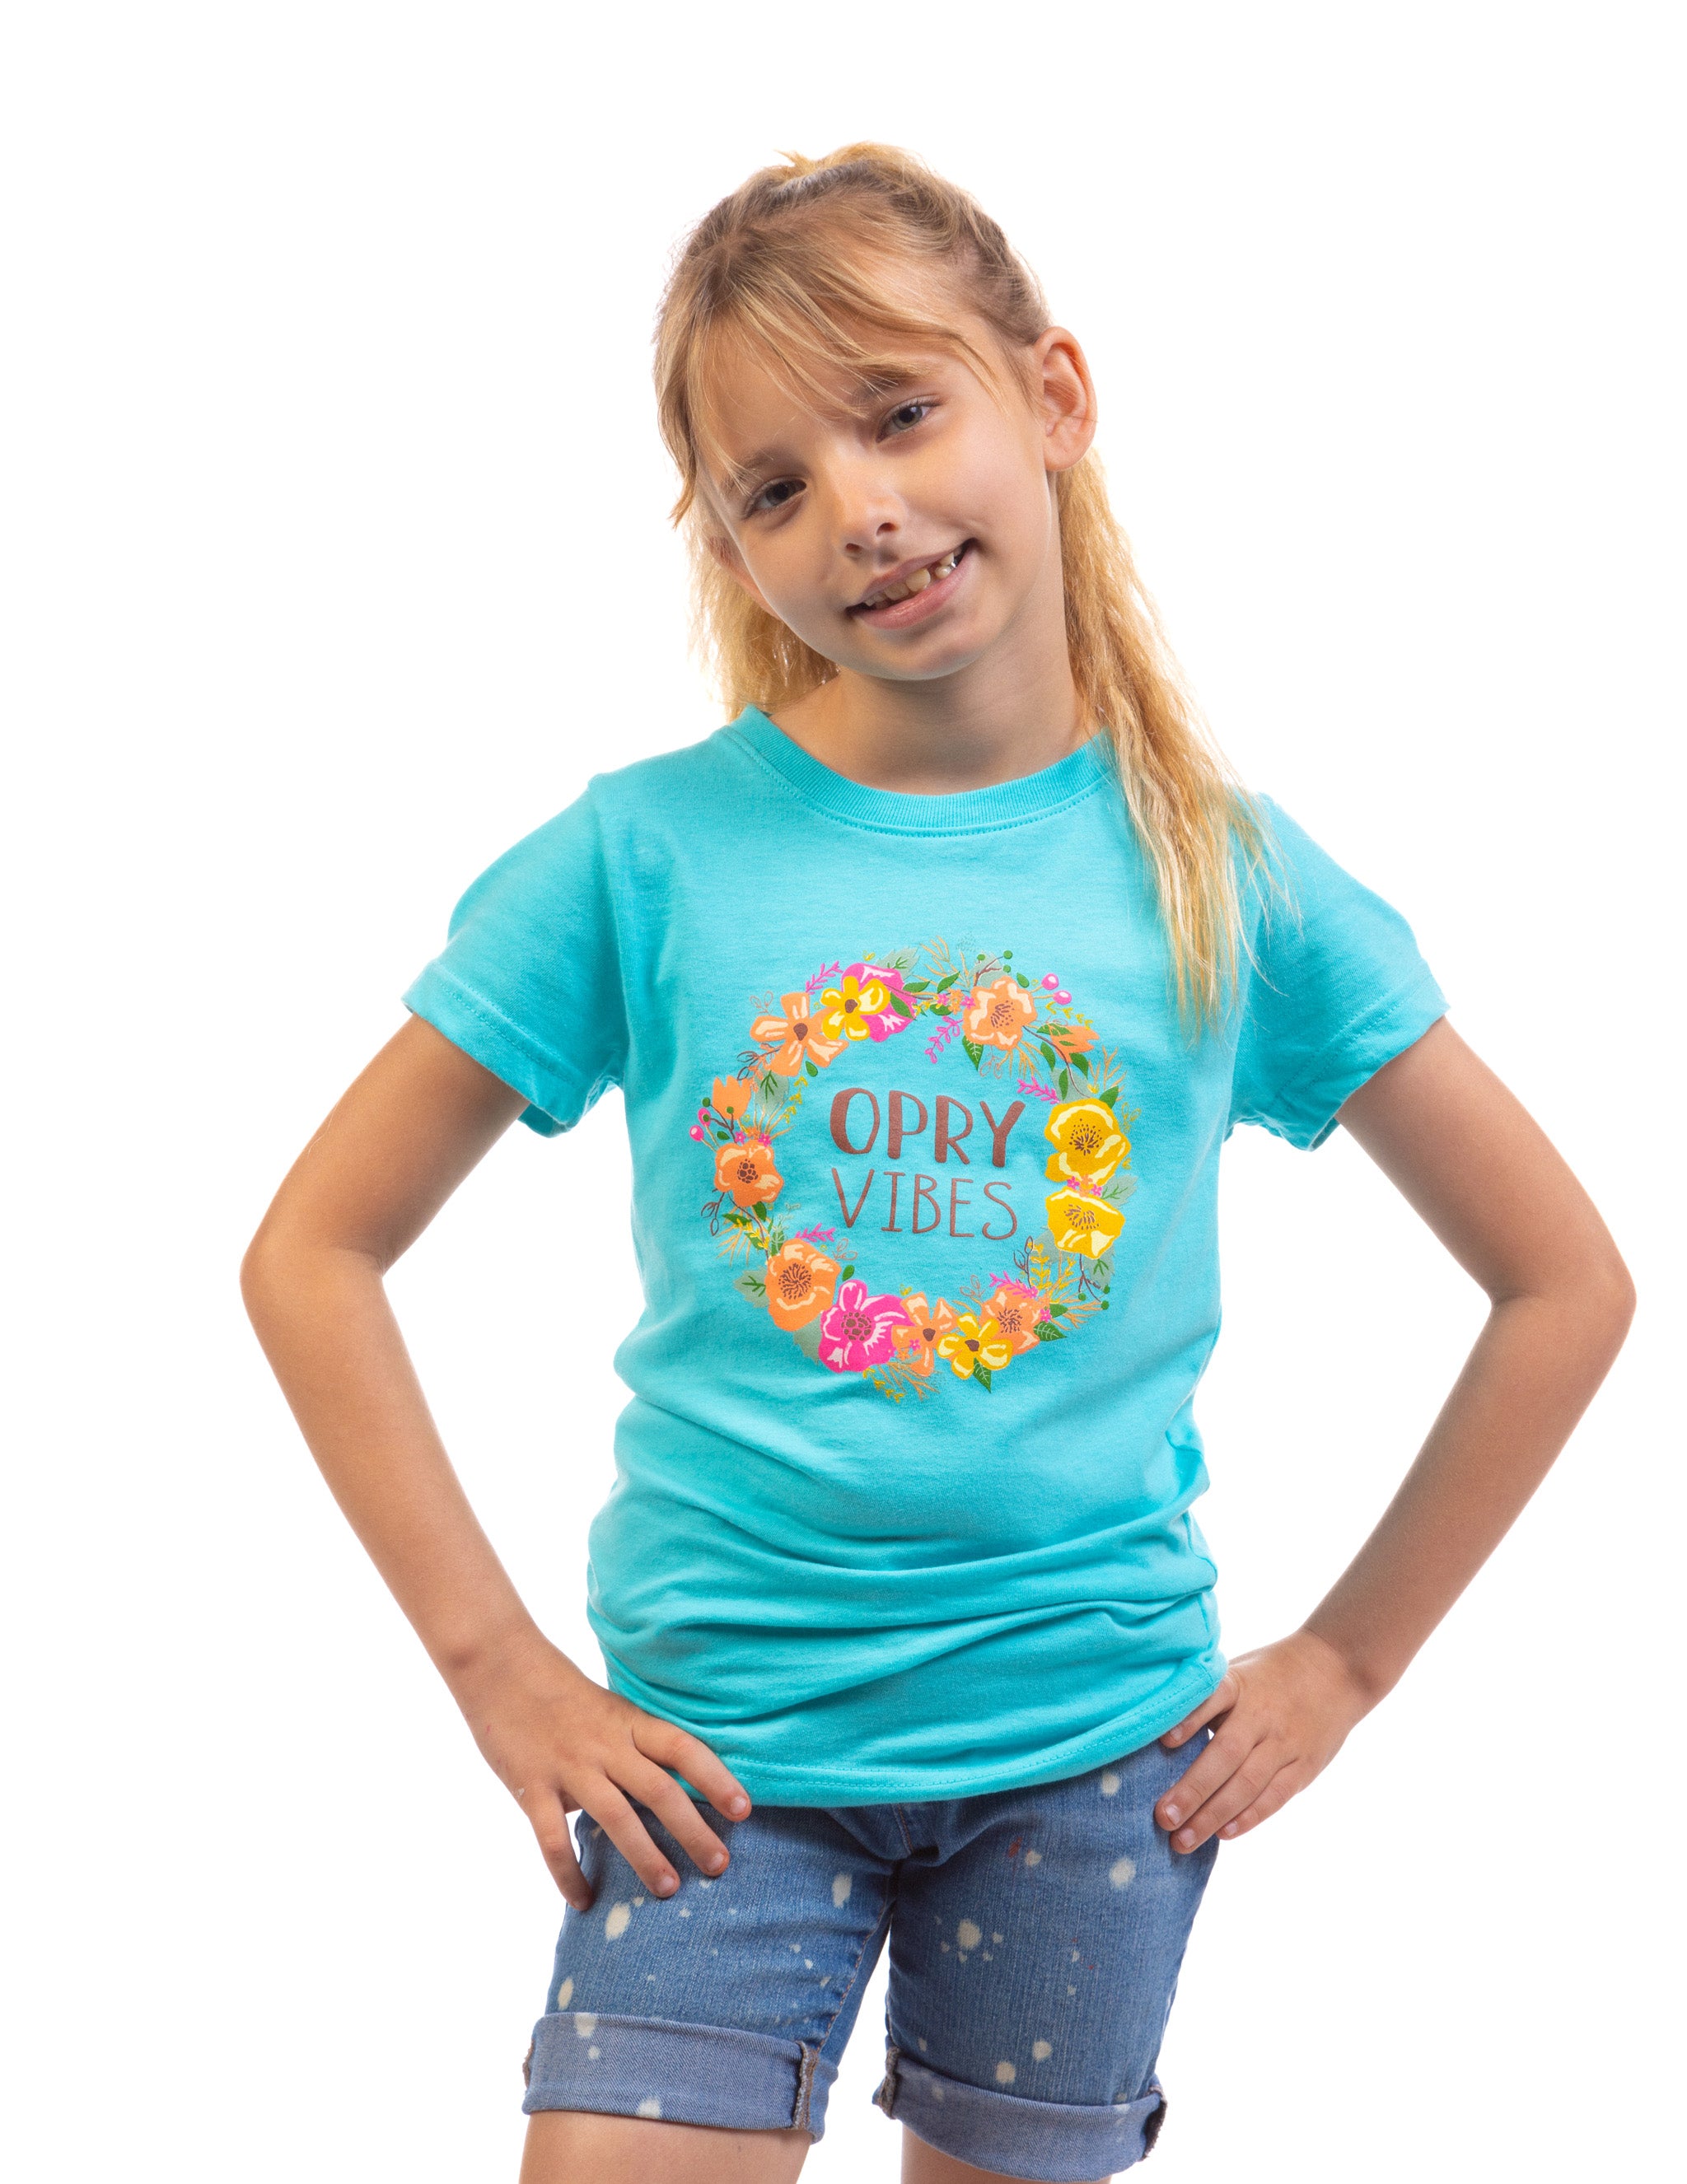 Opry Vibes Girl's T-Shirt